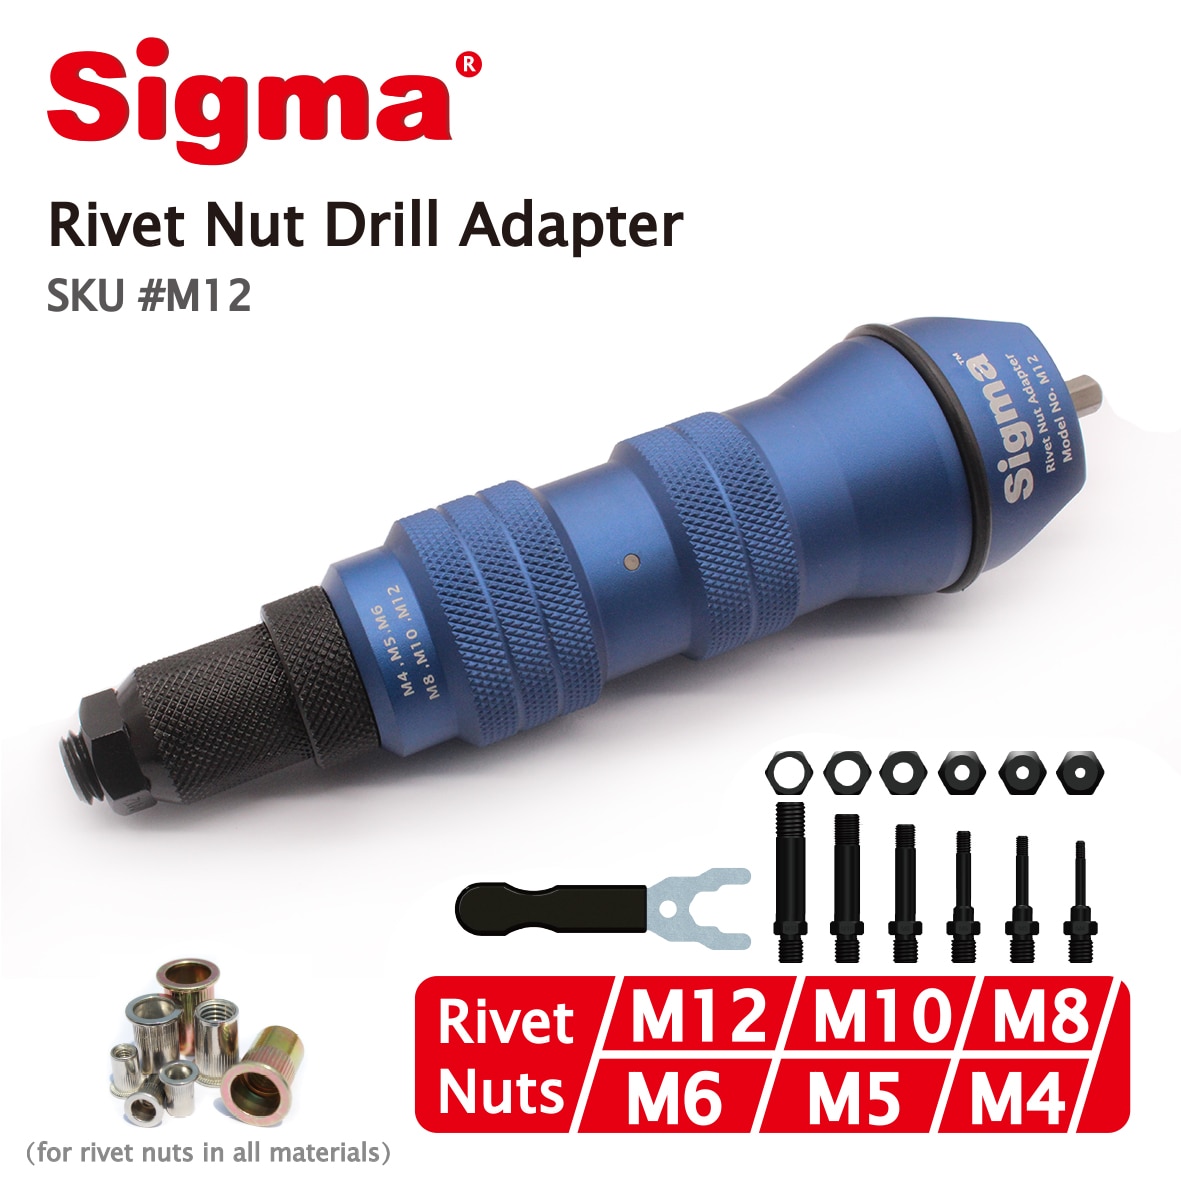 Sigma #M12 HEAVY DUTY Threaded Rivet Nut Drill Adapter Cordless or Electric power tool accessory alternative air rivet nut gun